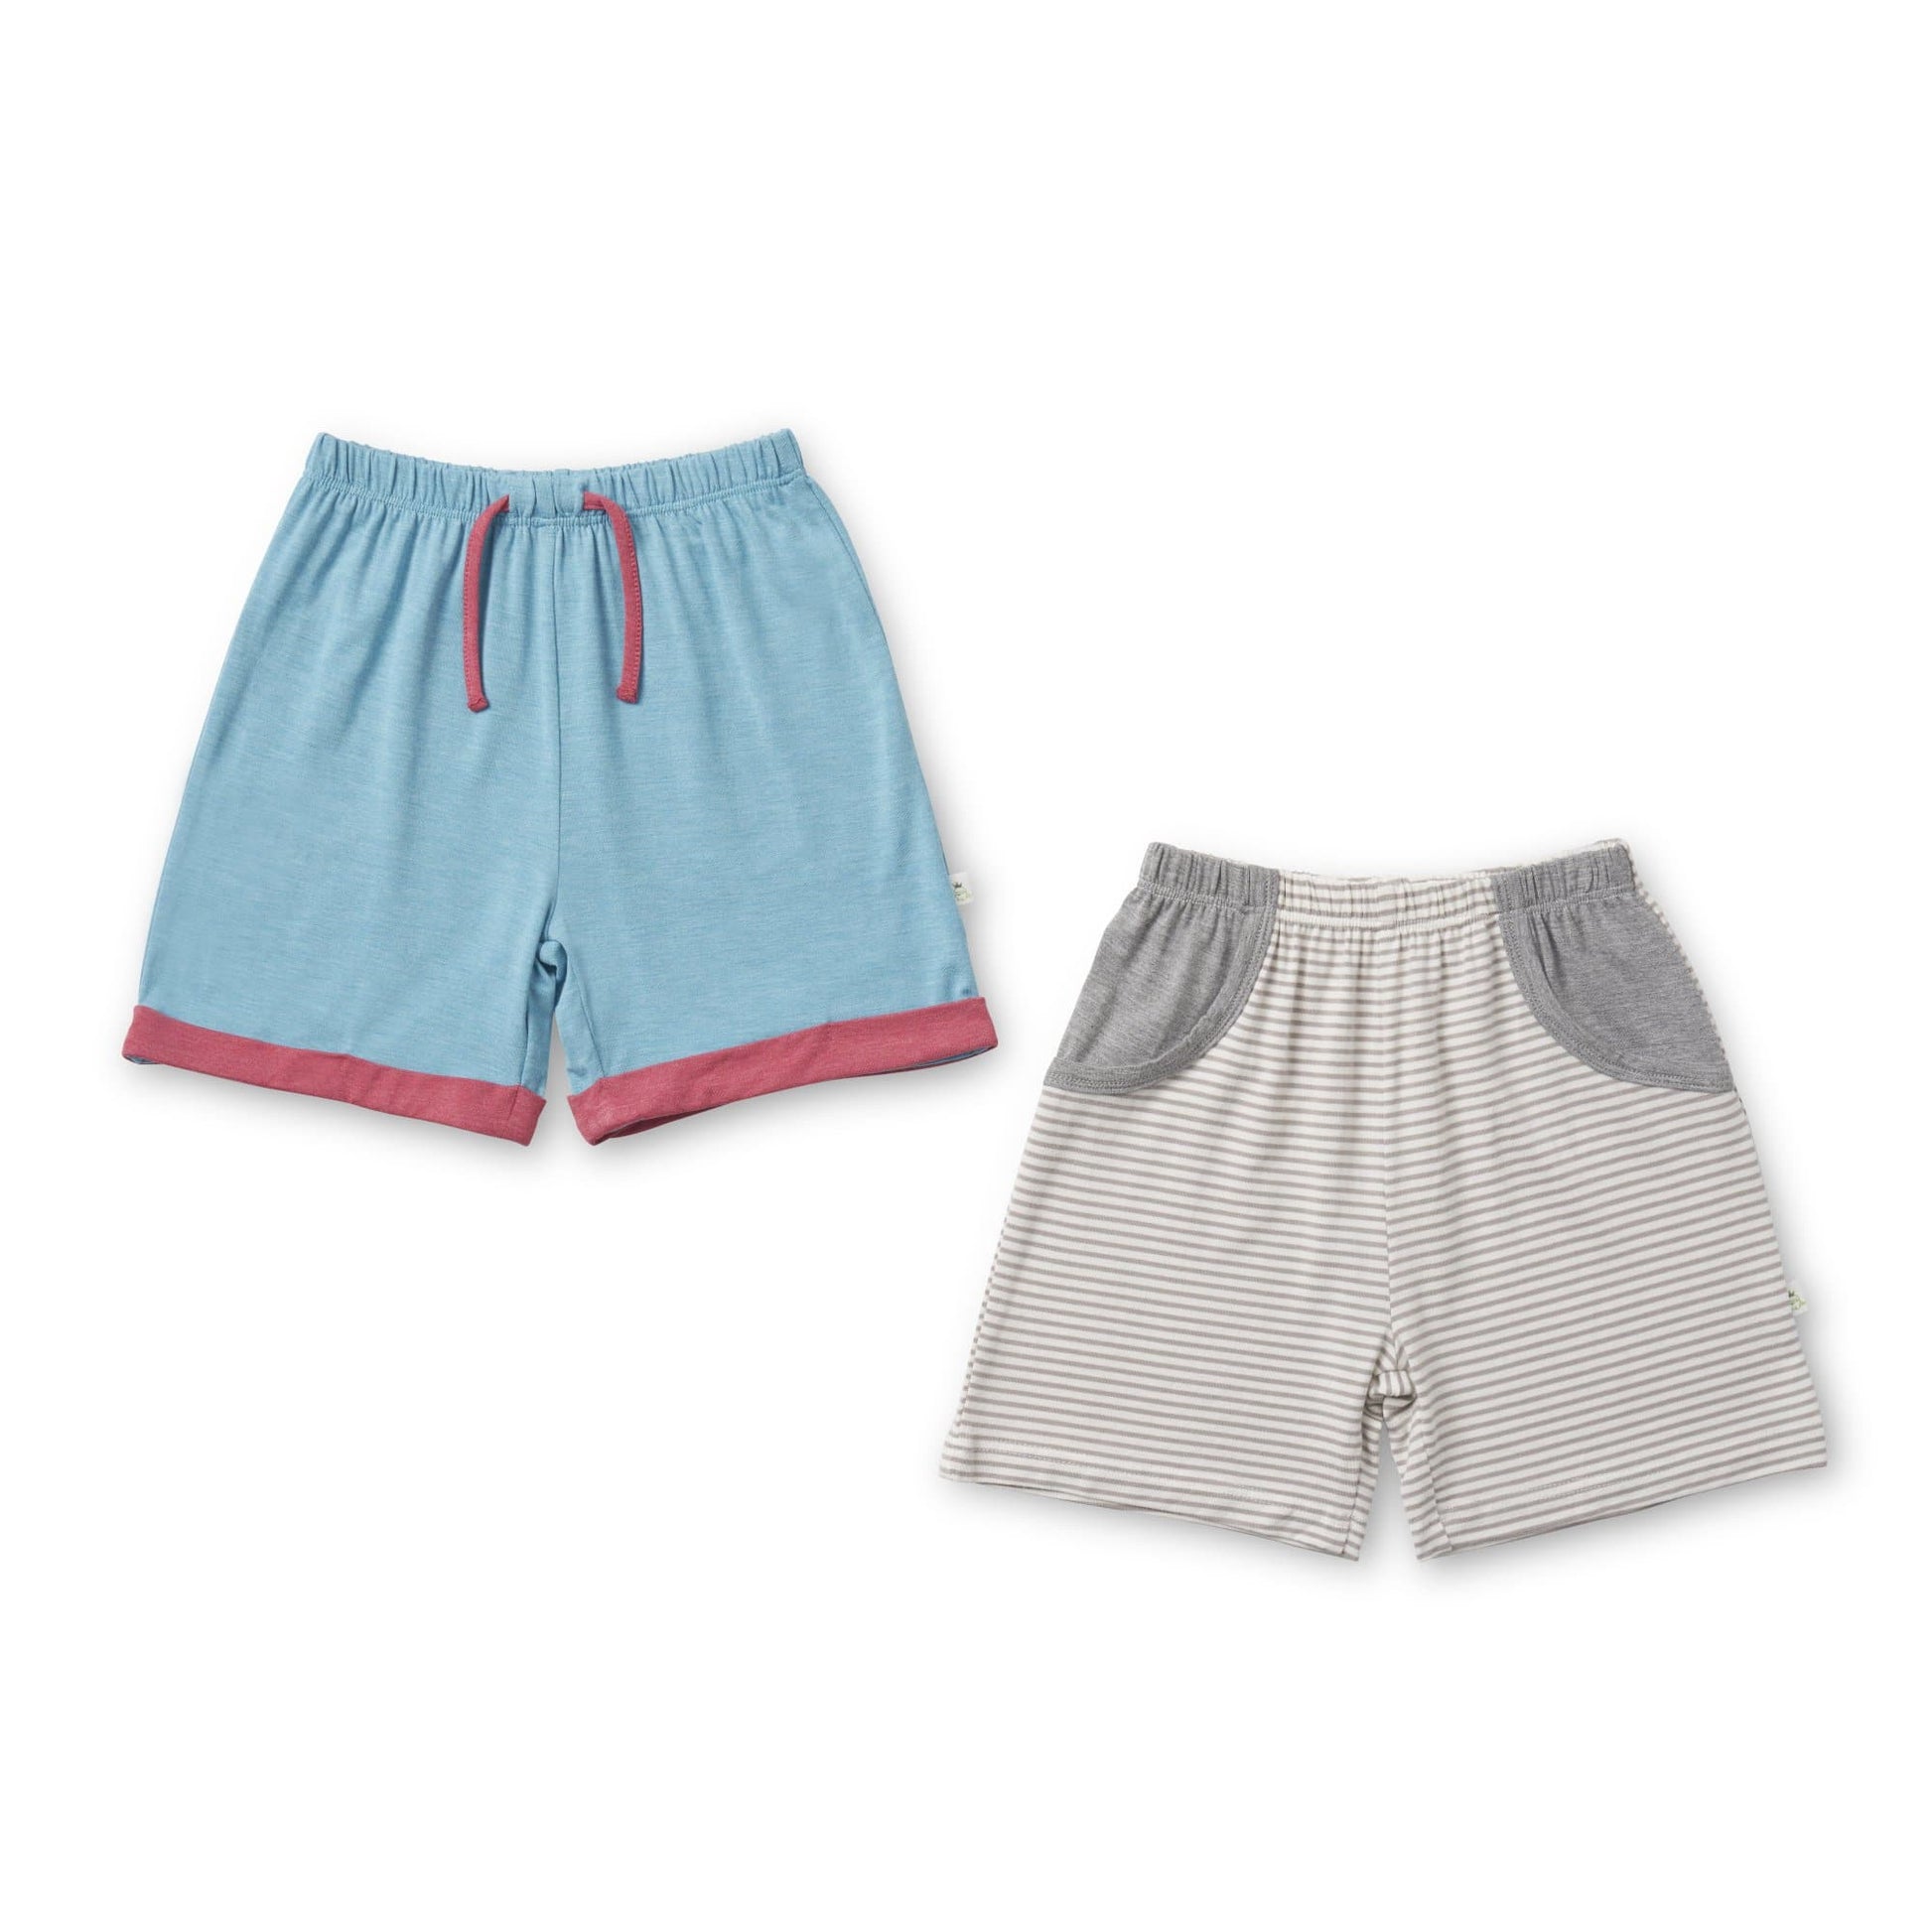 Shorts with Mocked Pocket/Drawstring (Sandwash Lagoon Blue & Grey Stripes) - Simply Life